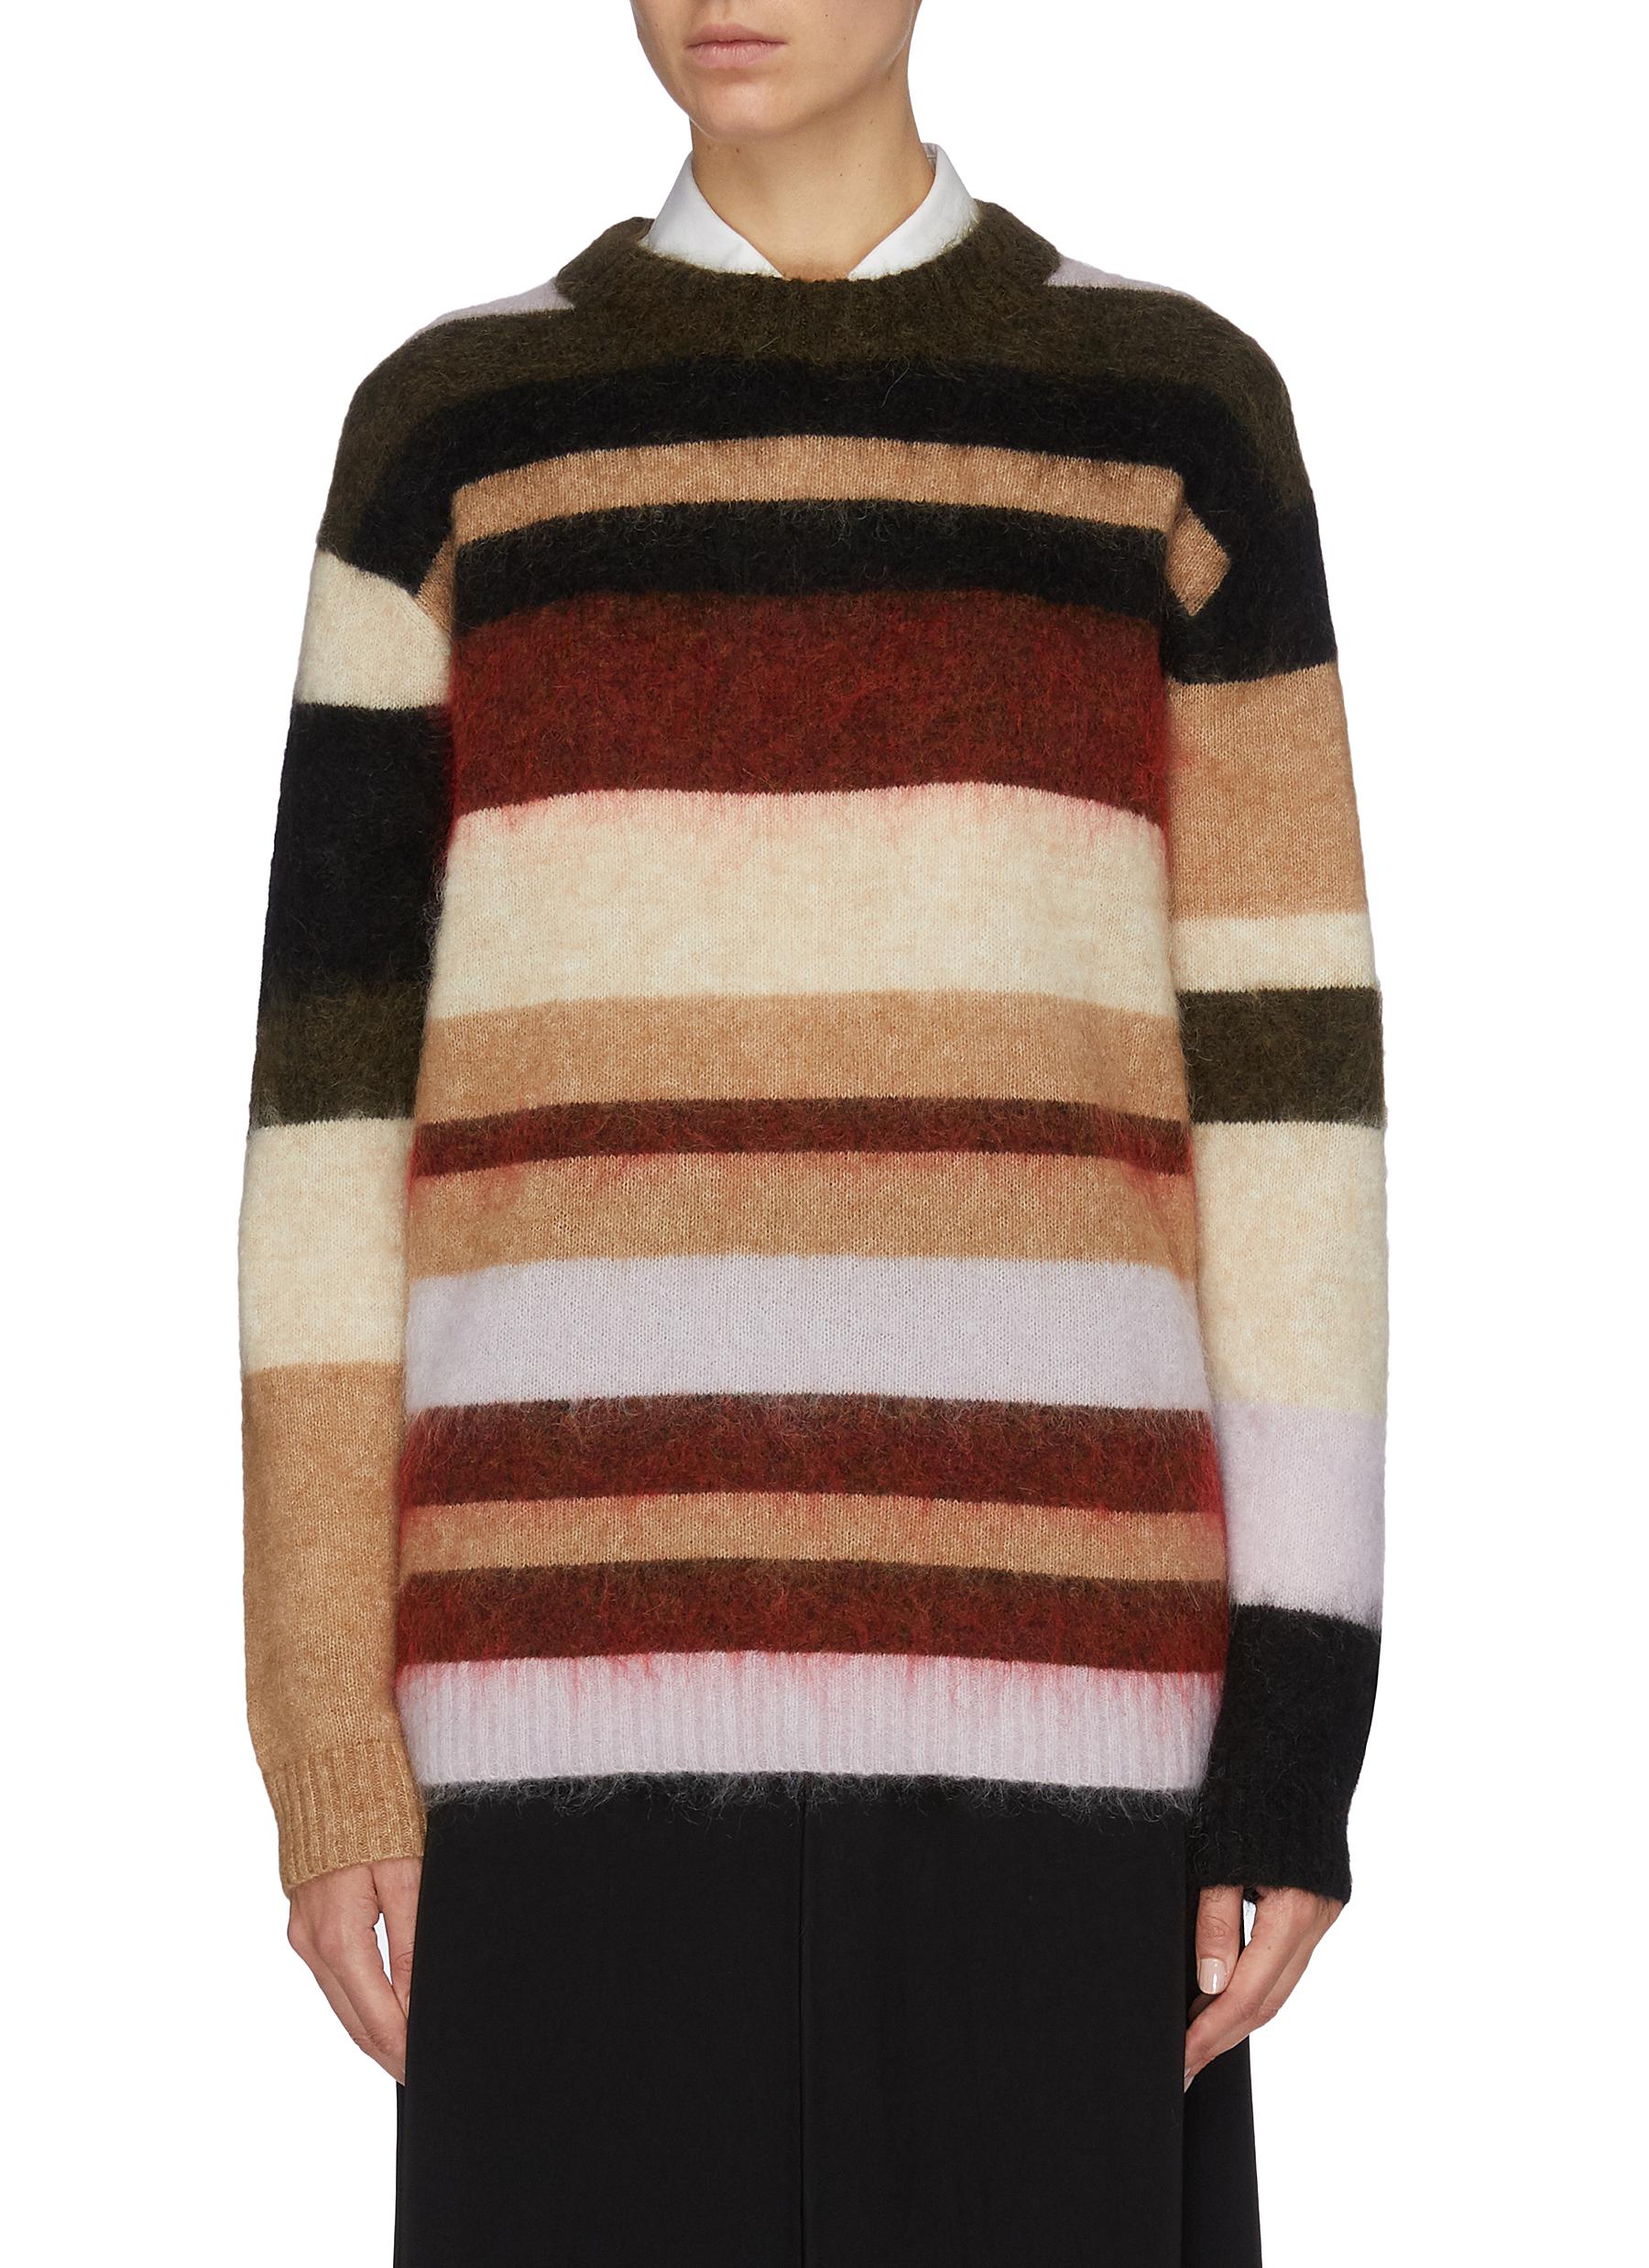 Colourblock stripe oversized sweater by Acne Studios | Coshio Online Shop